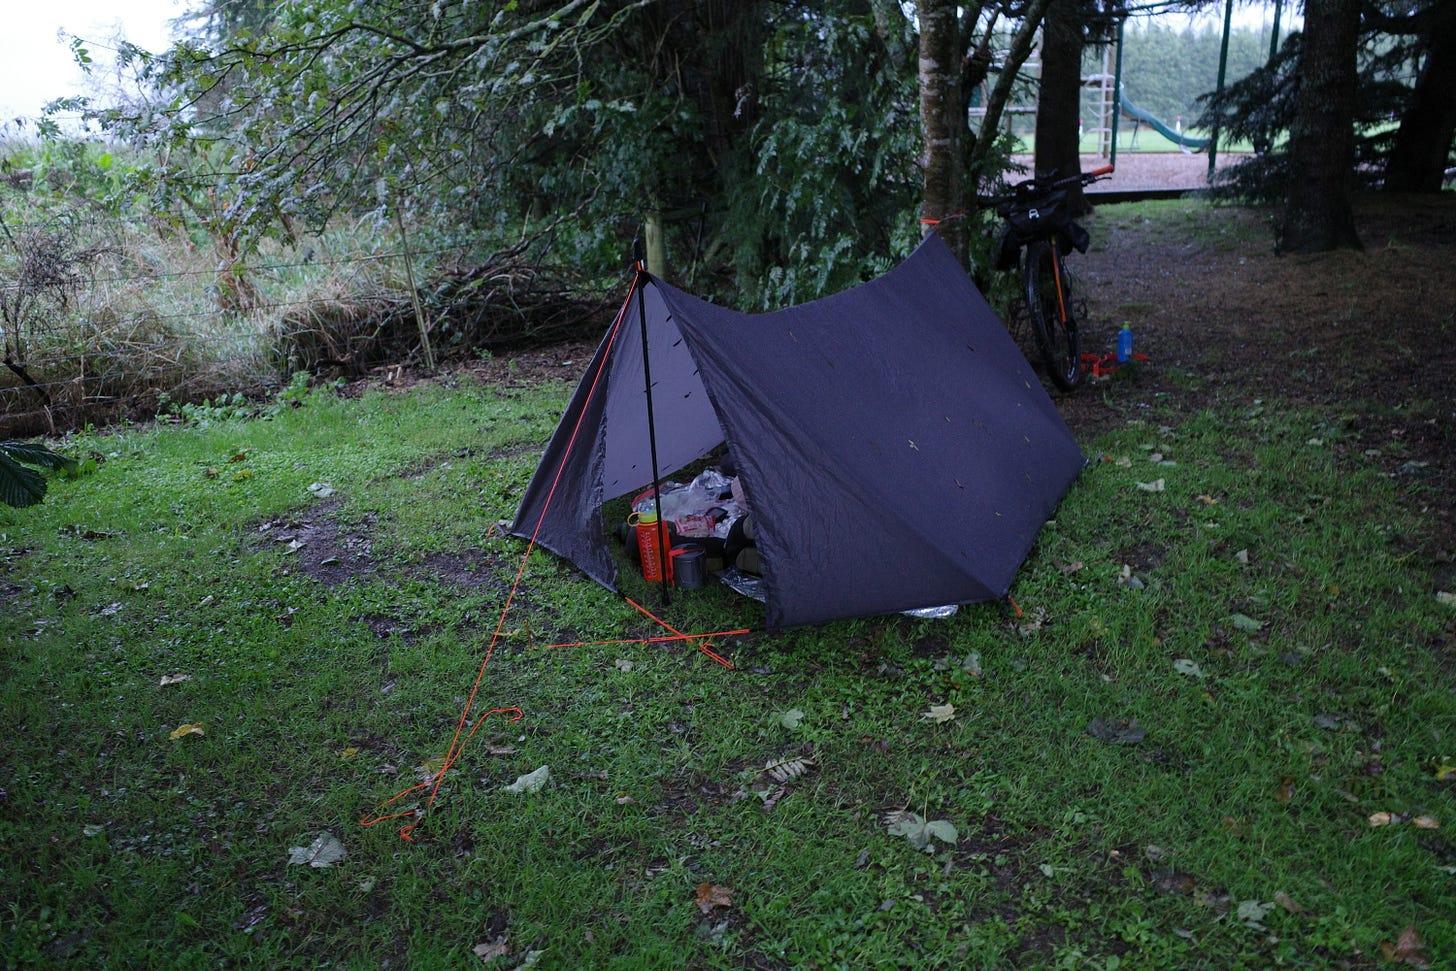 Robbie's bivy and tarp camping setup